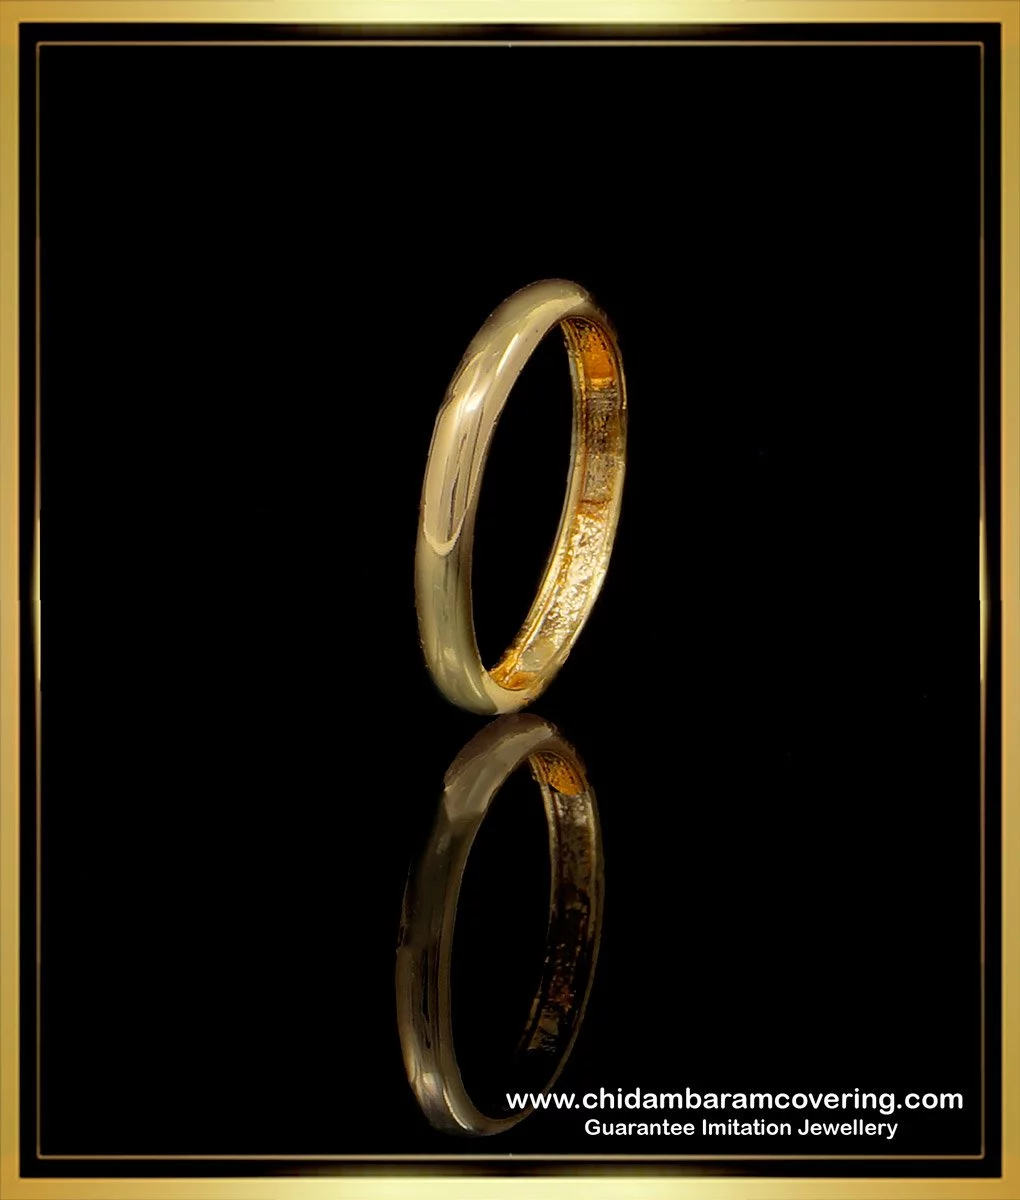 1 Gram Gold Forming Black Stone With Diamond Antique Design Ring - Style  A787, रोडियम रिंग, रोडियम की अंगूठी - Soni Fashion, Rajkot | ID:  2852928410673